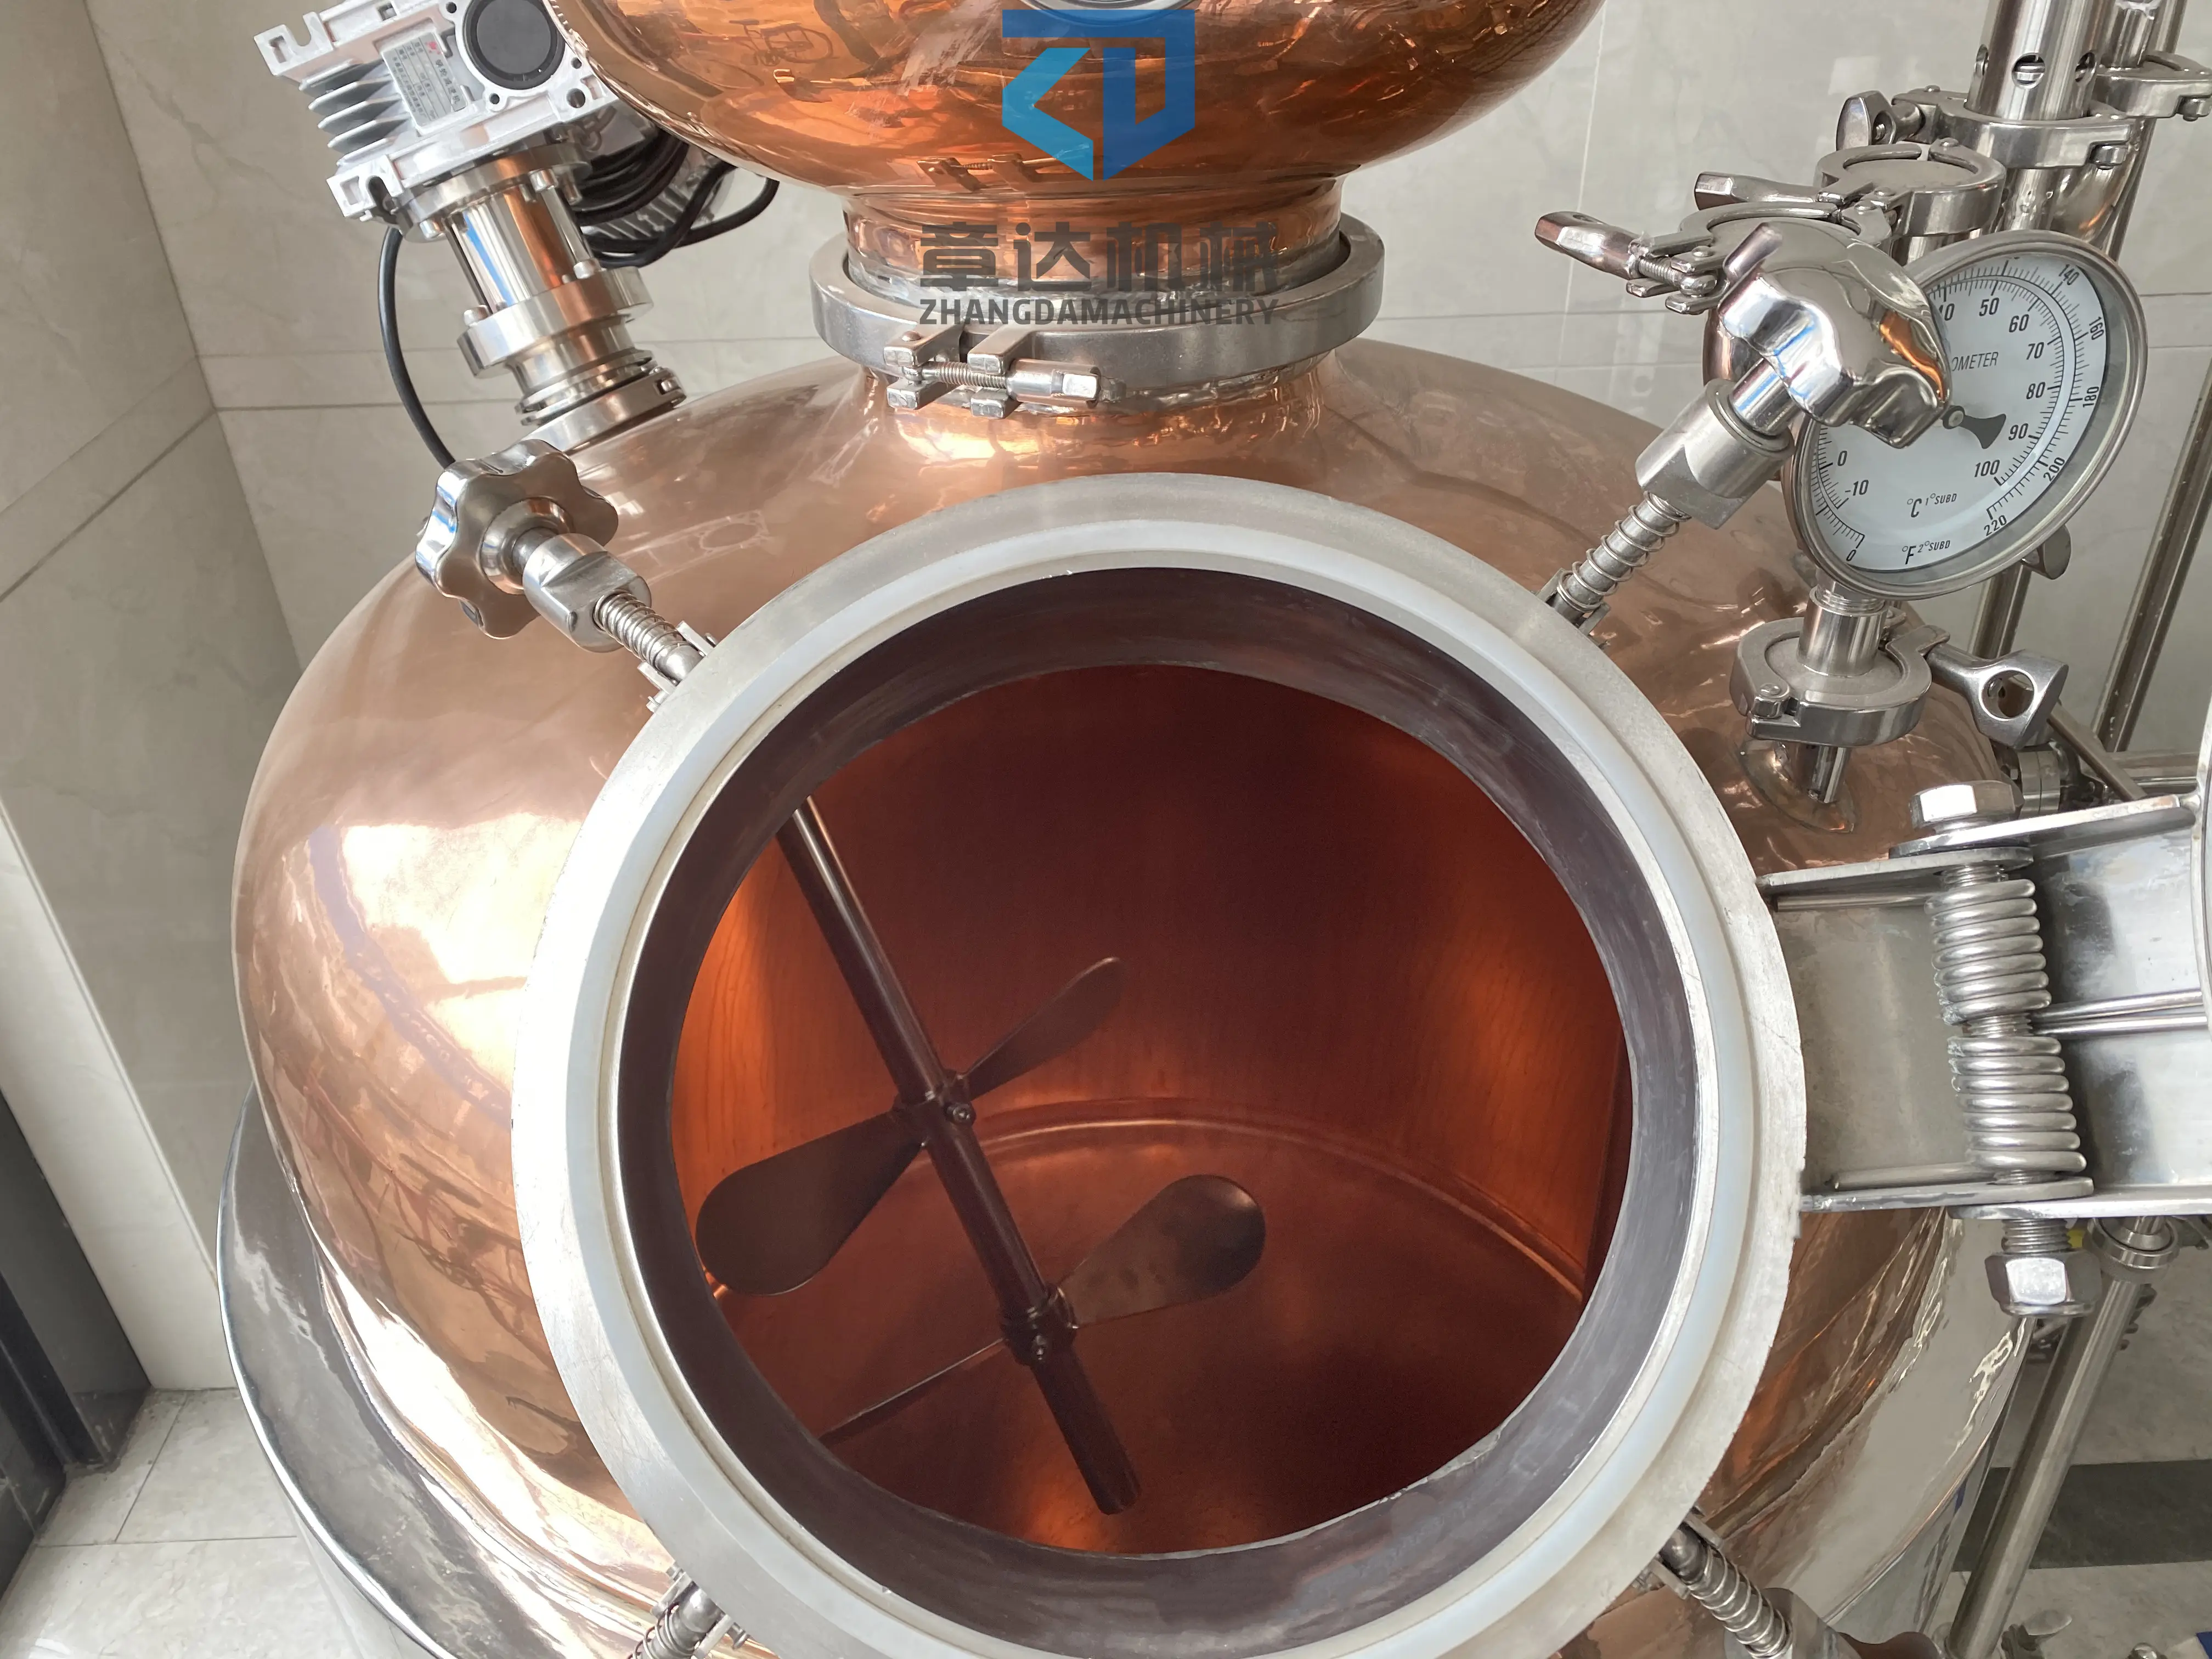 gin distiller whisky distiller with distillation column 500l copper distilling equipment for ethanol